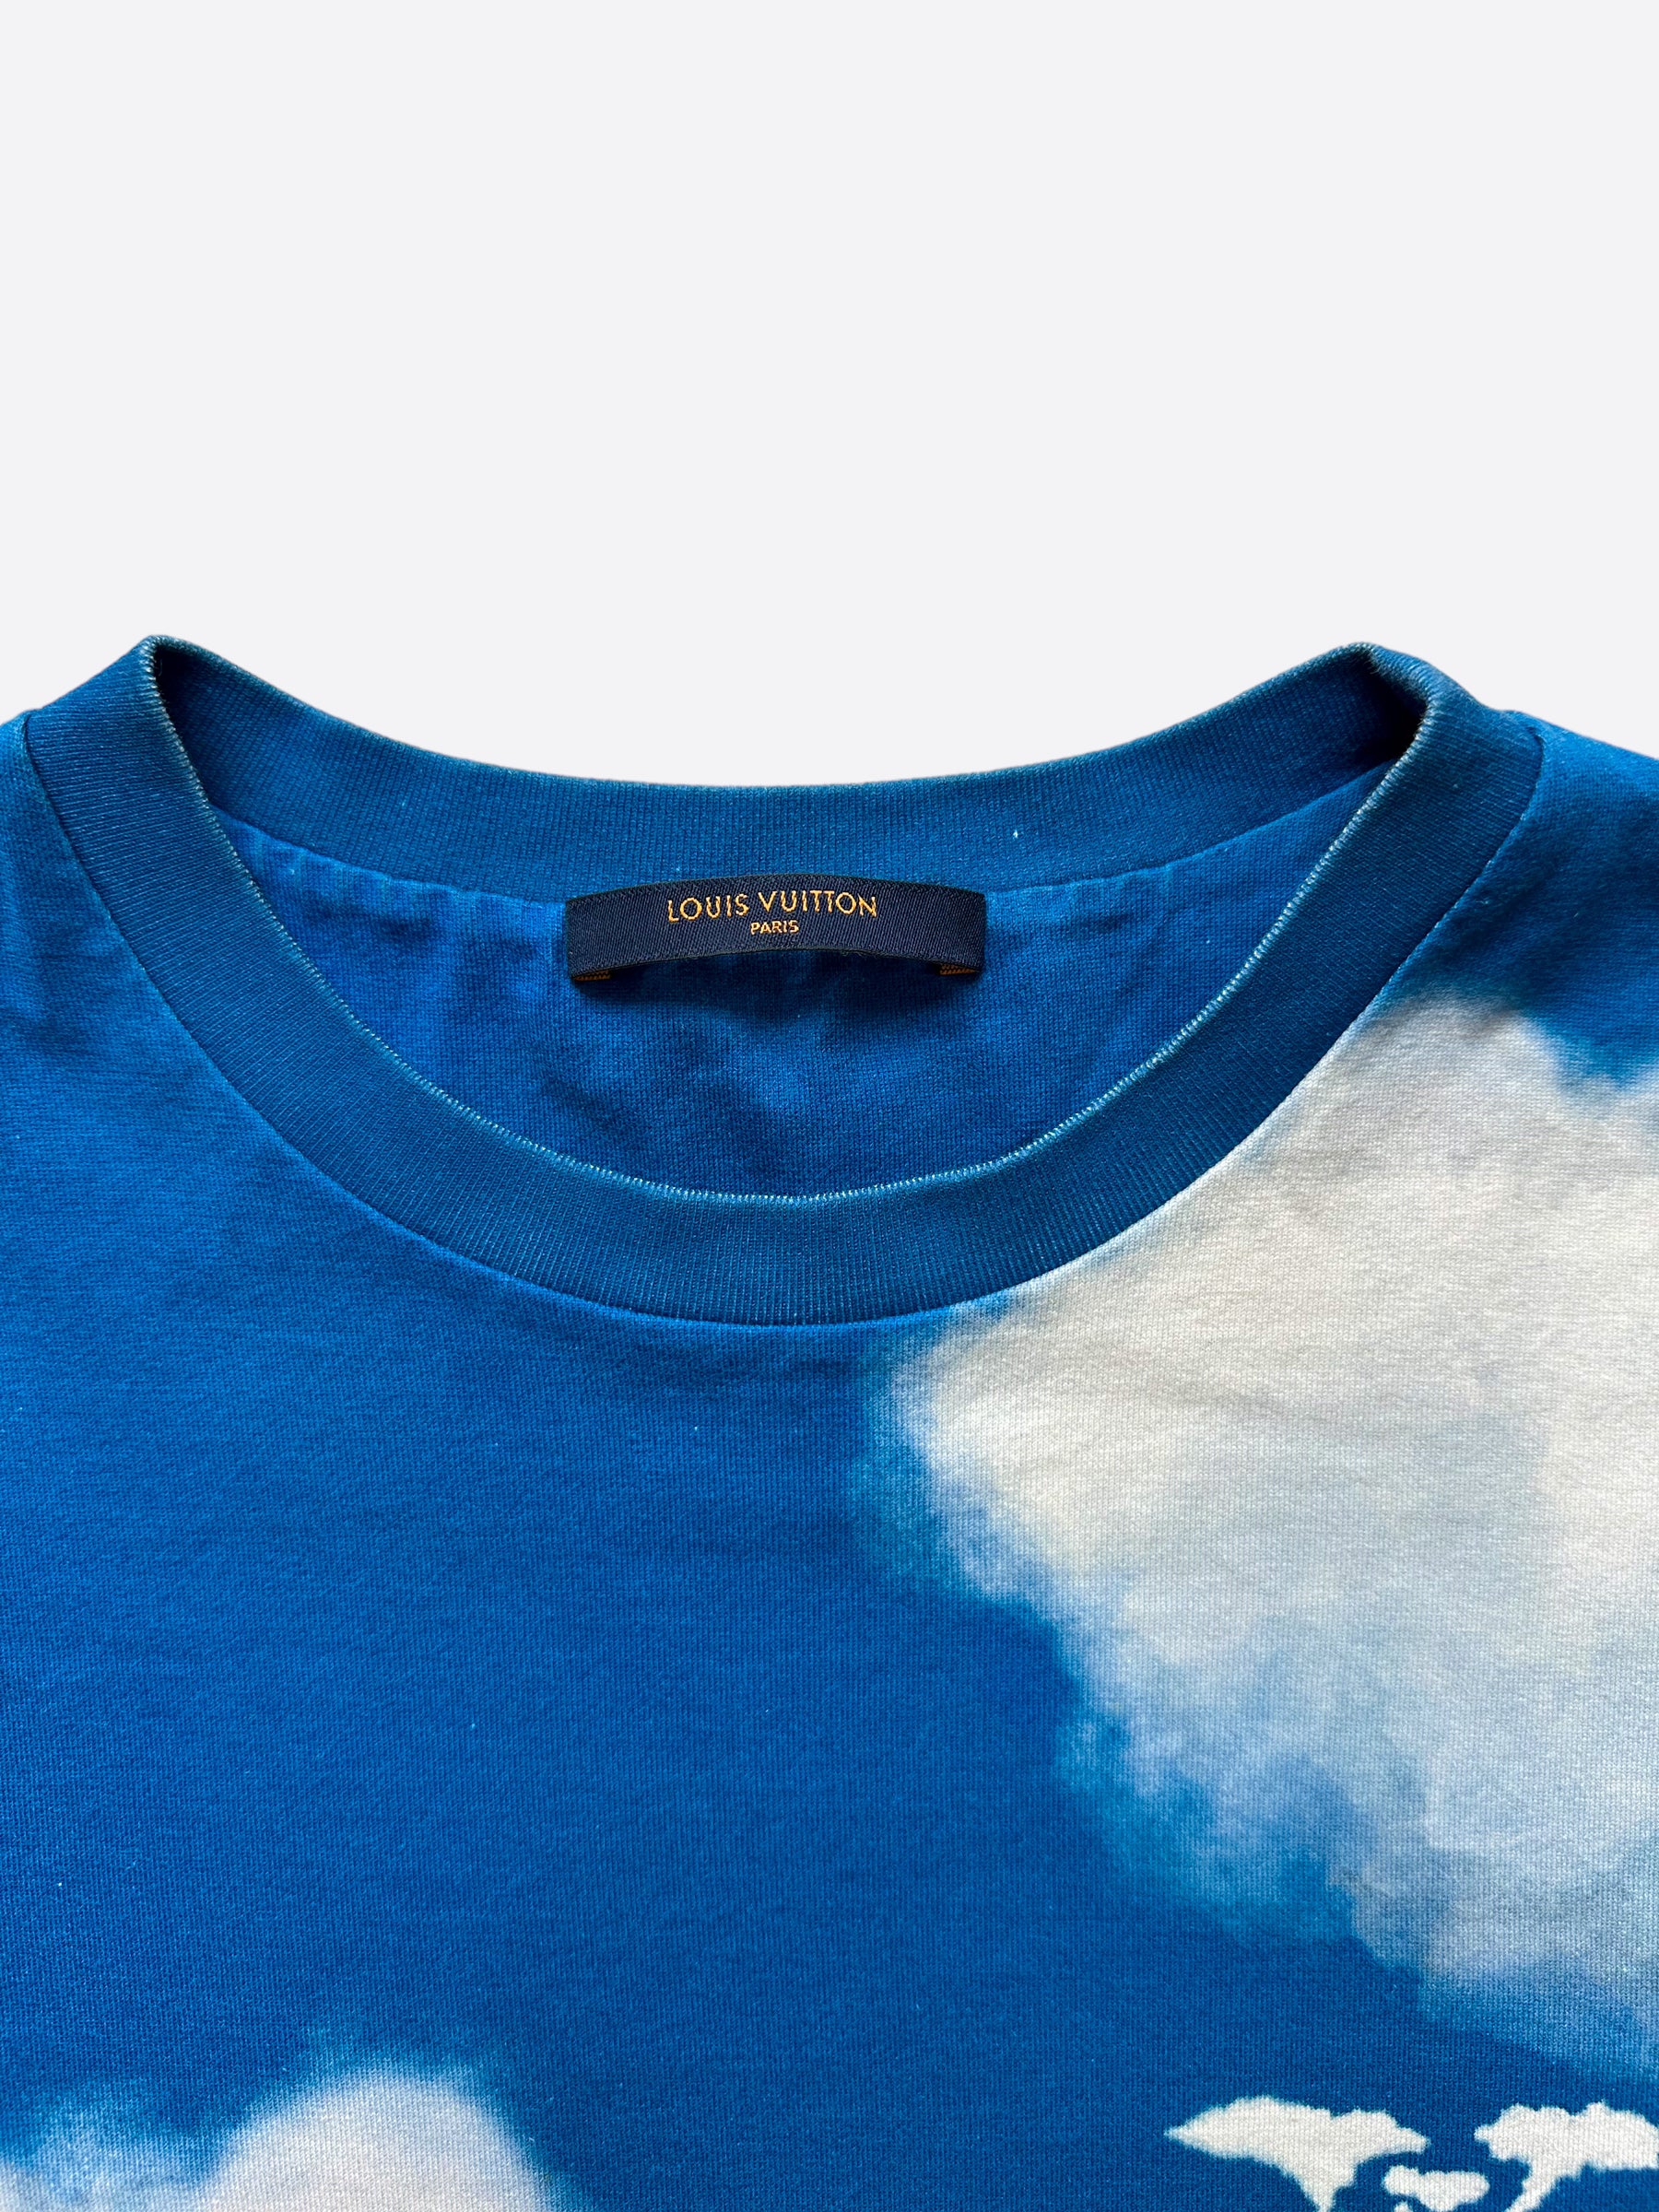 Louis Vuitton Cloud Blue T Shirt - XL / Blue